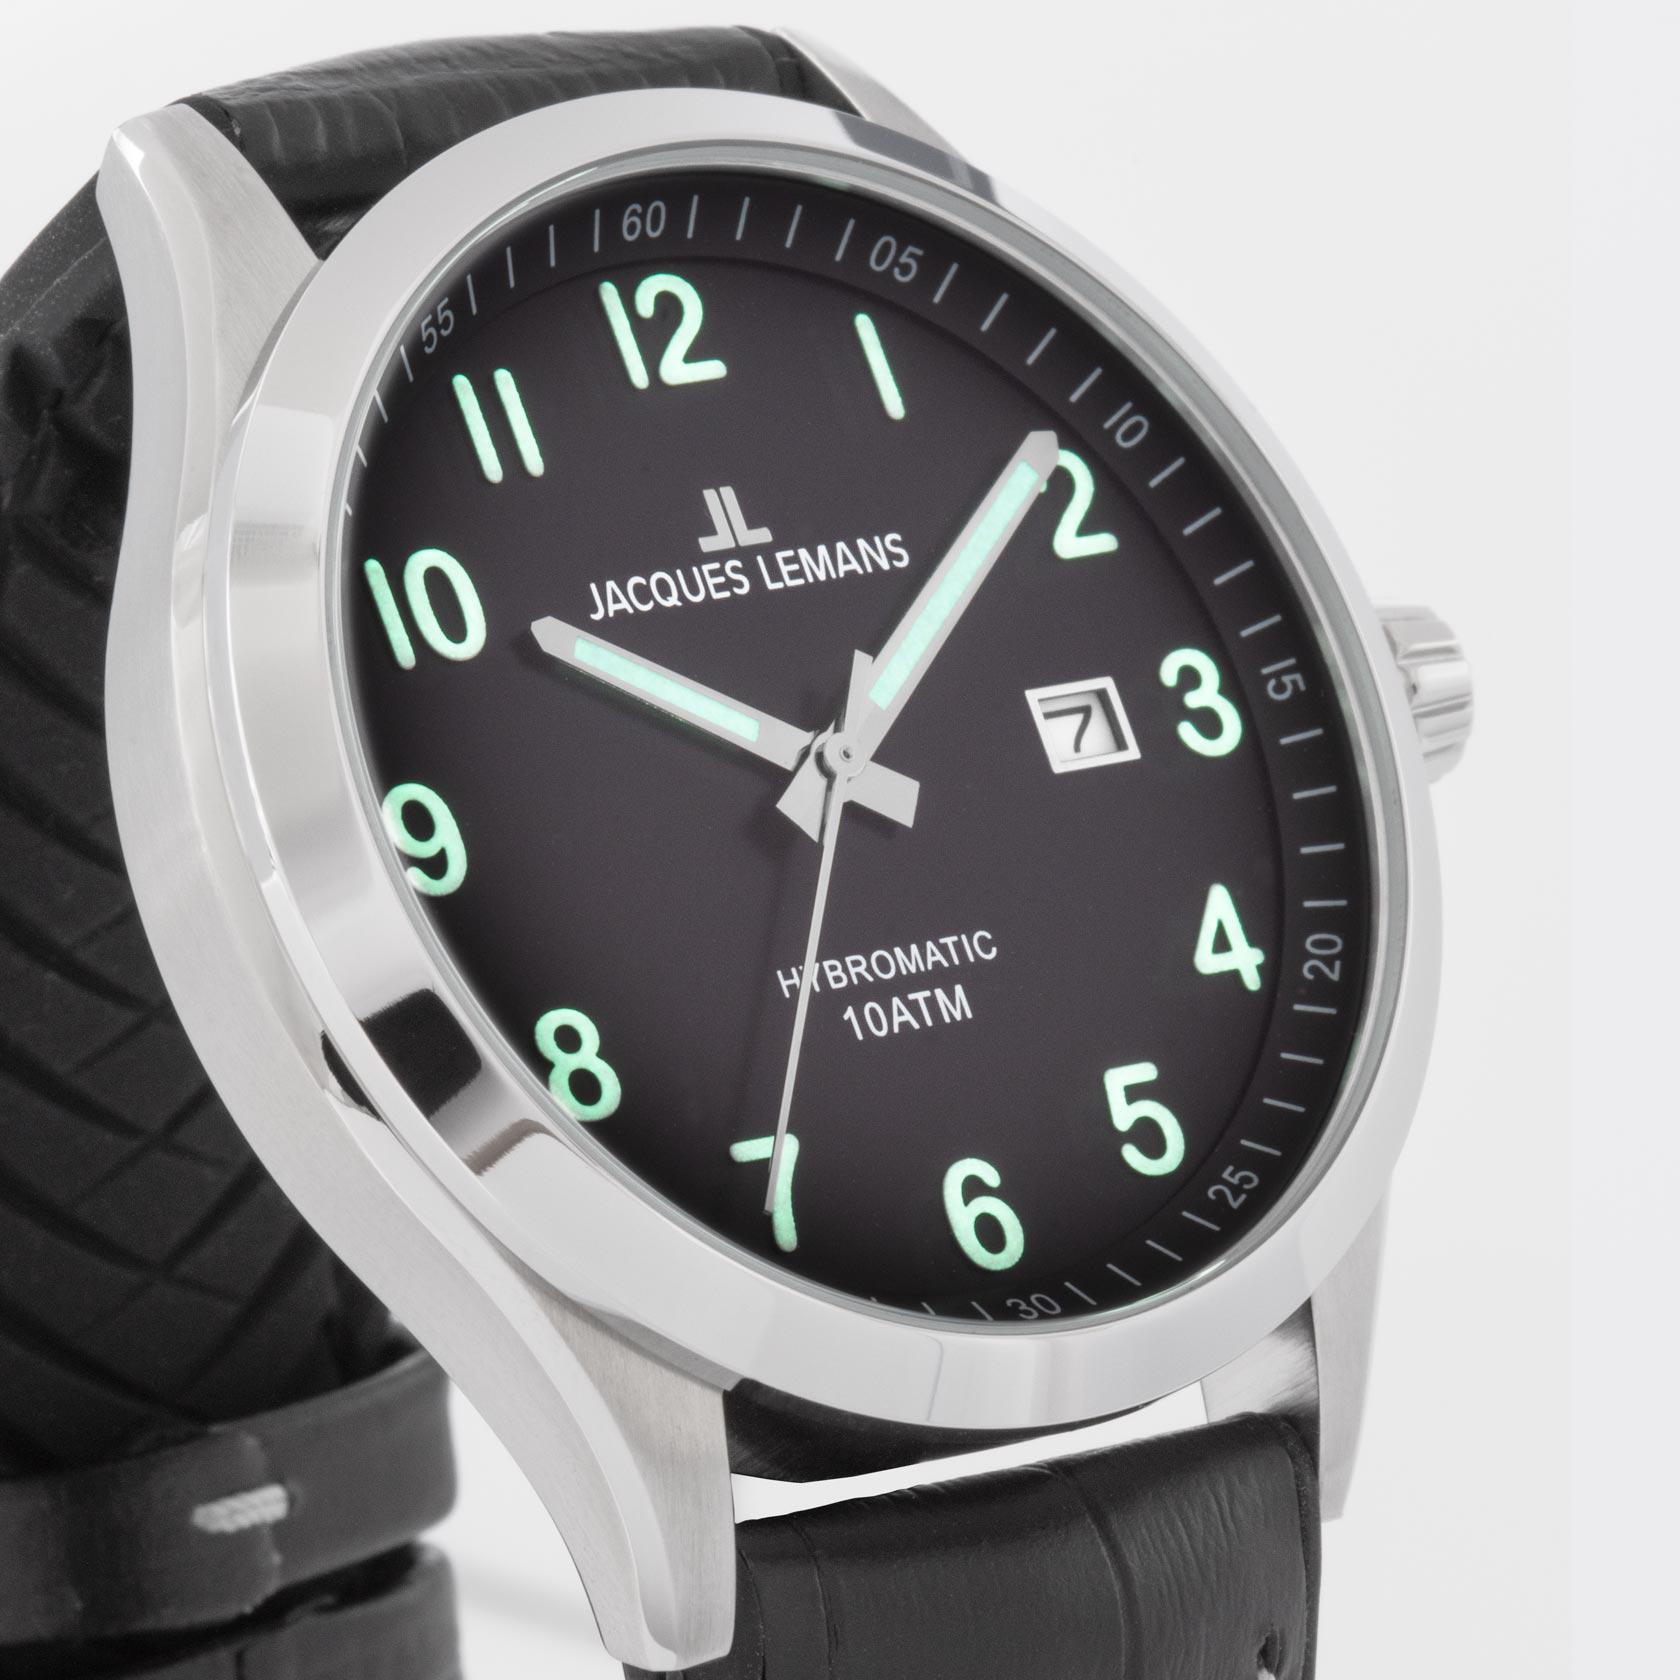 1-2130D, мужские часы - купить Lemans Jacques Hybromatic